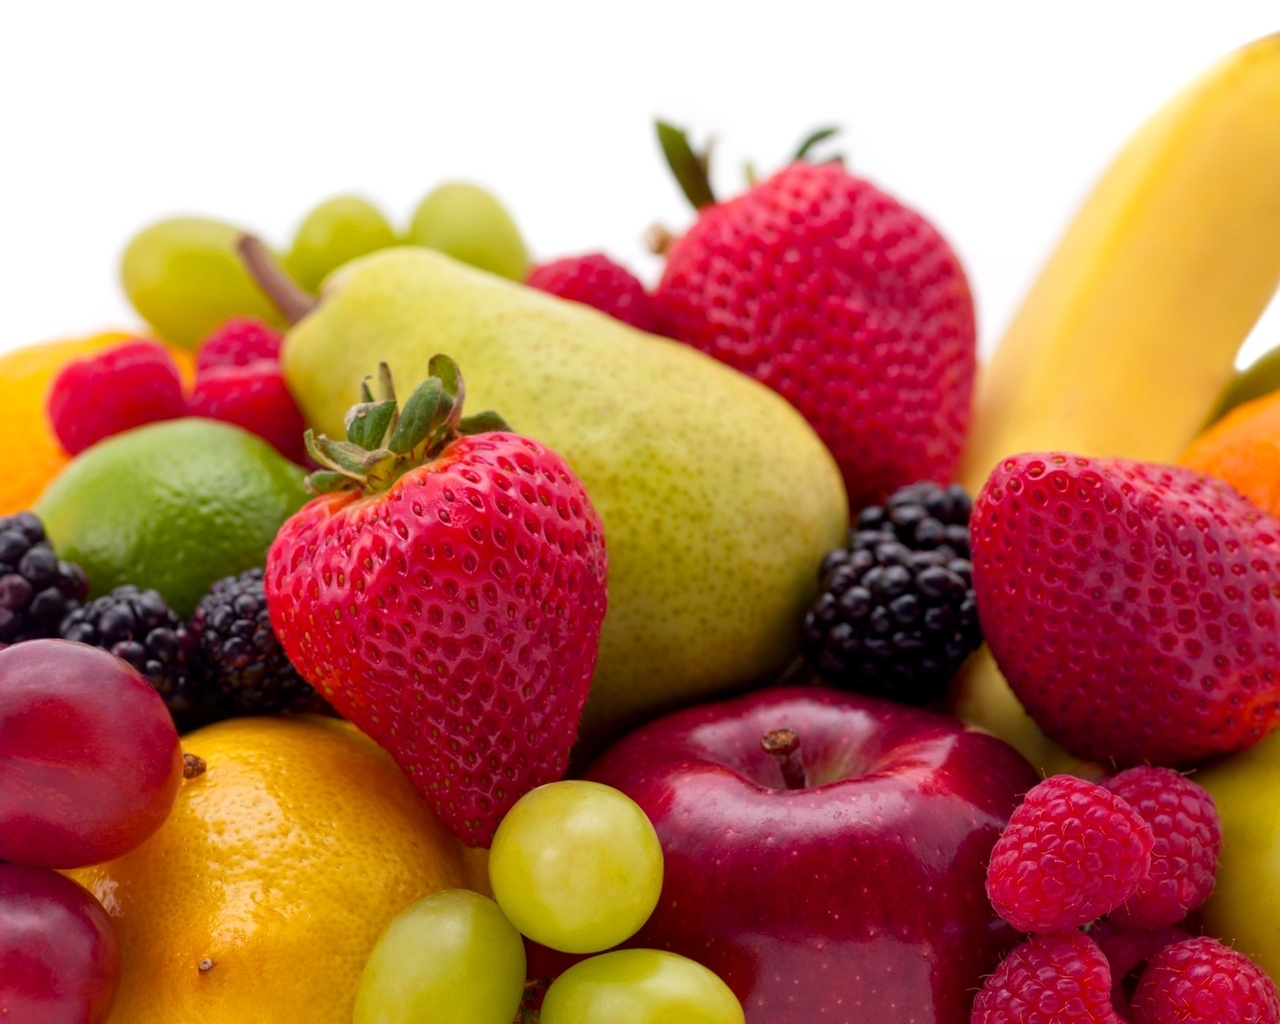 Картинка: Фрукты, ягода, клубника, малина, ежевика, груша, яблоко, виноград, банан, лимон, лайм, апельсин